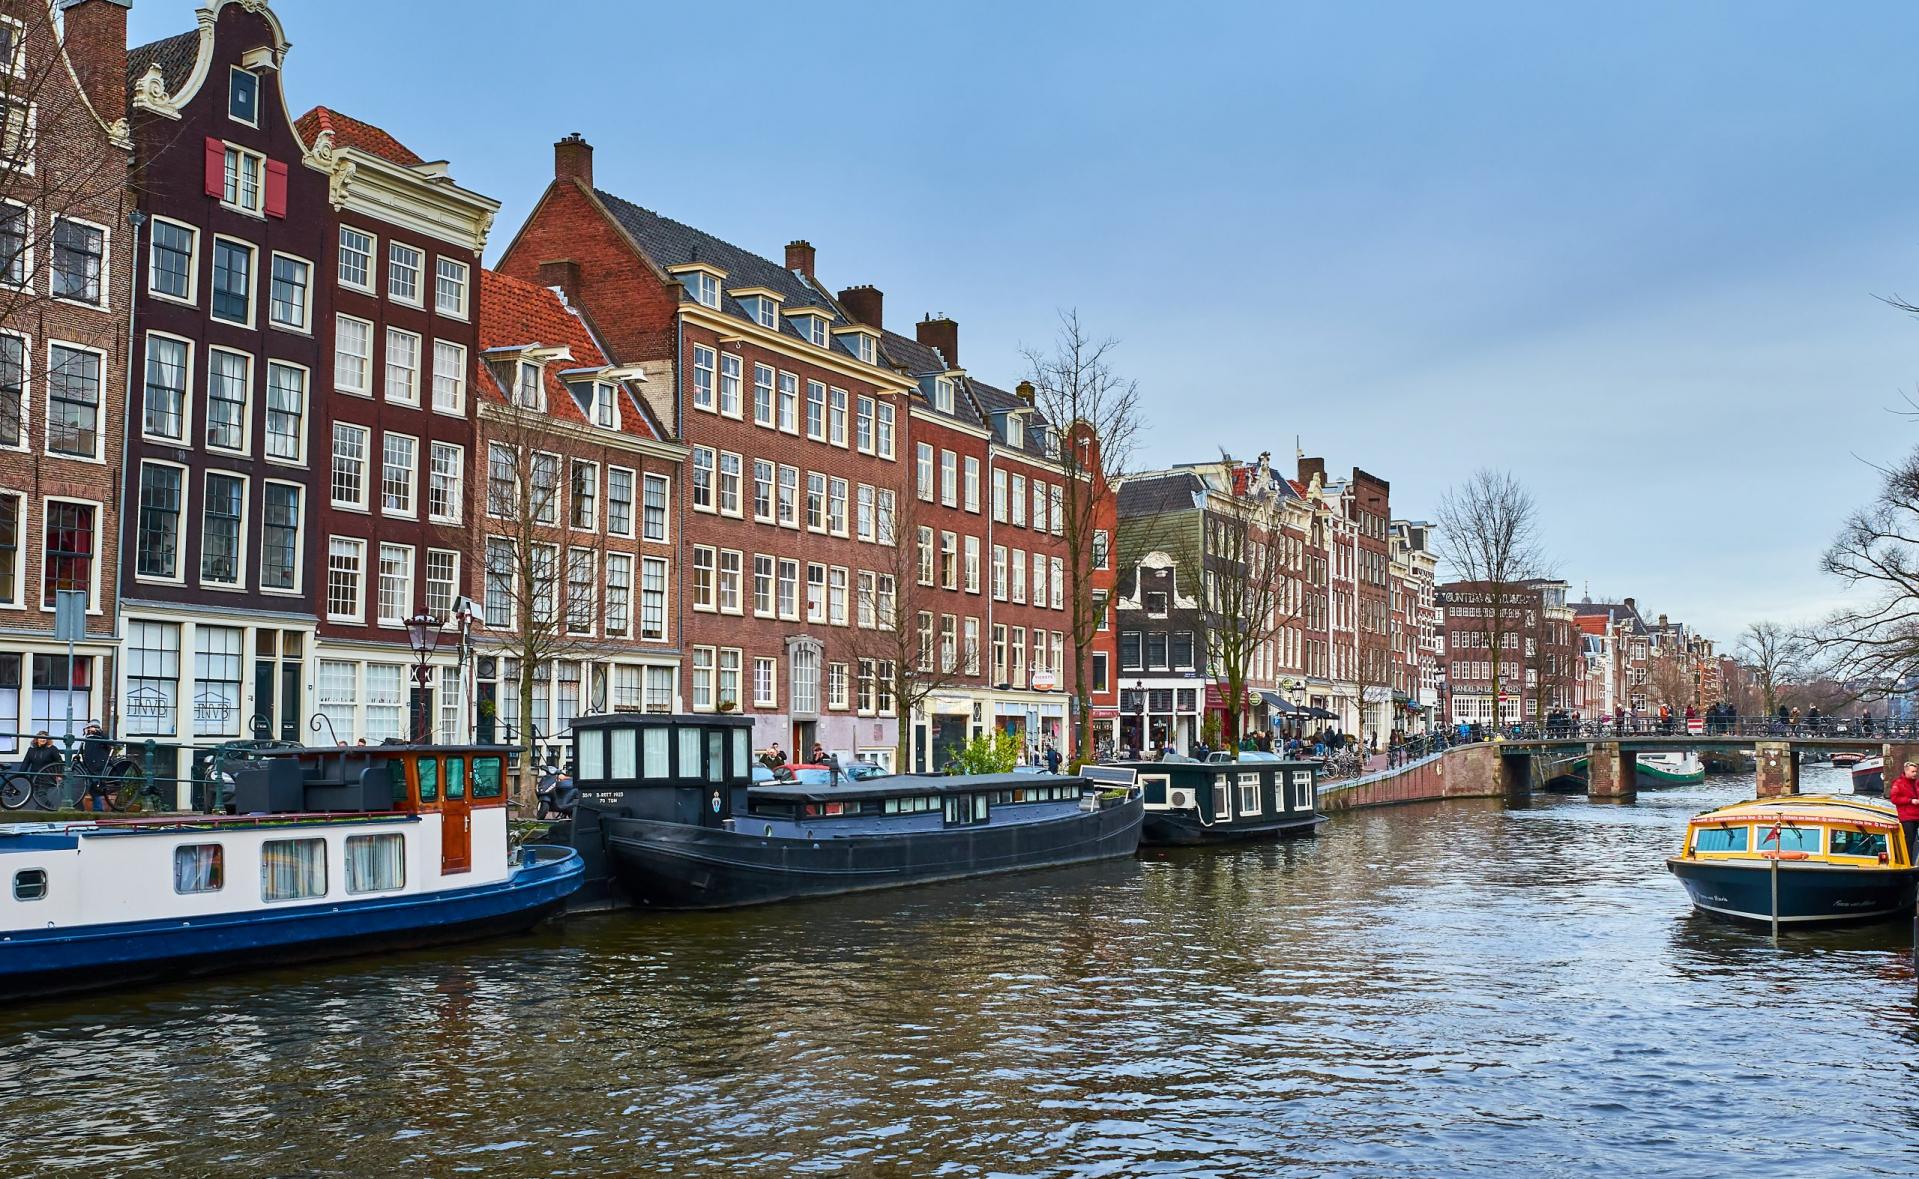 Amsterdam Canal, Netherlands